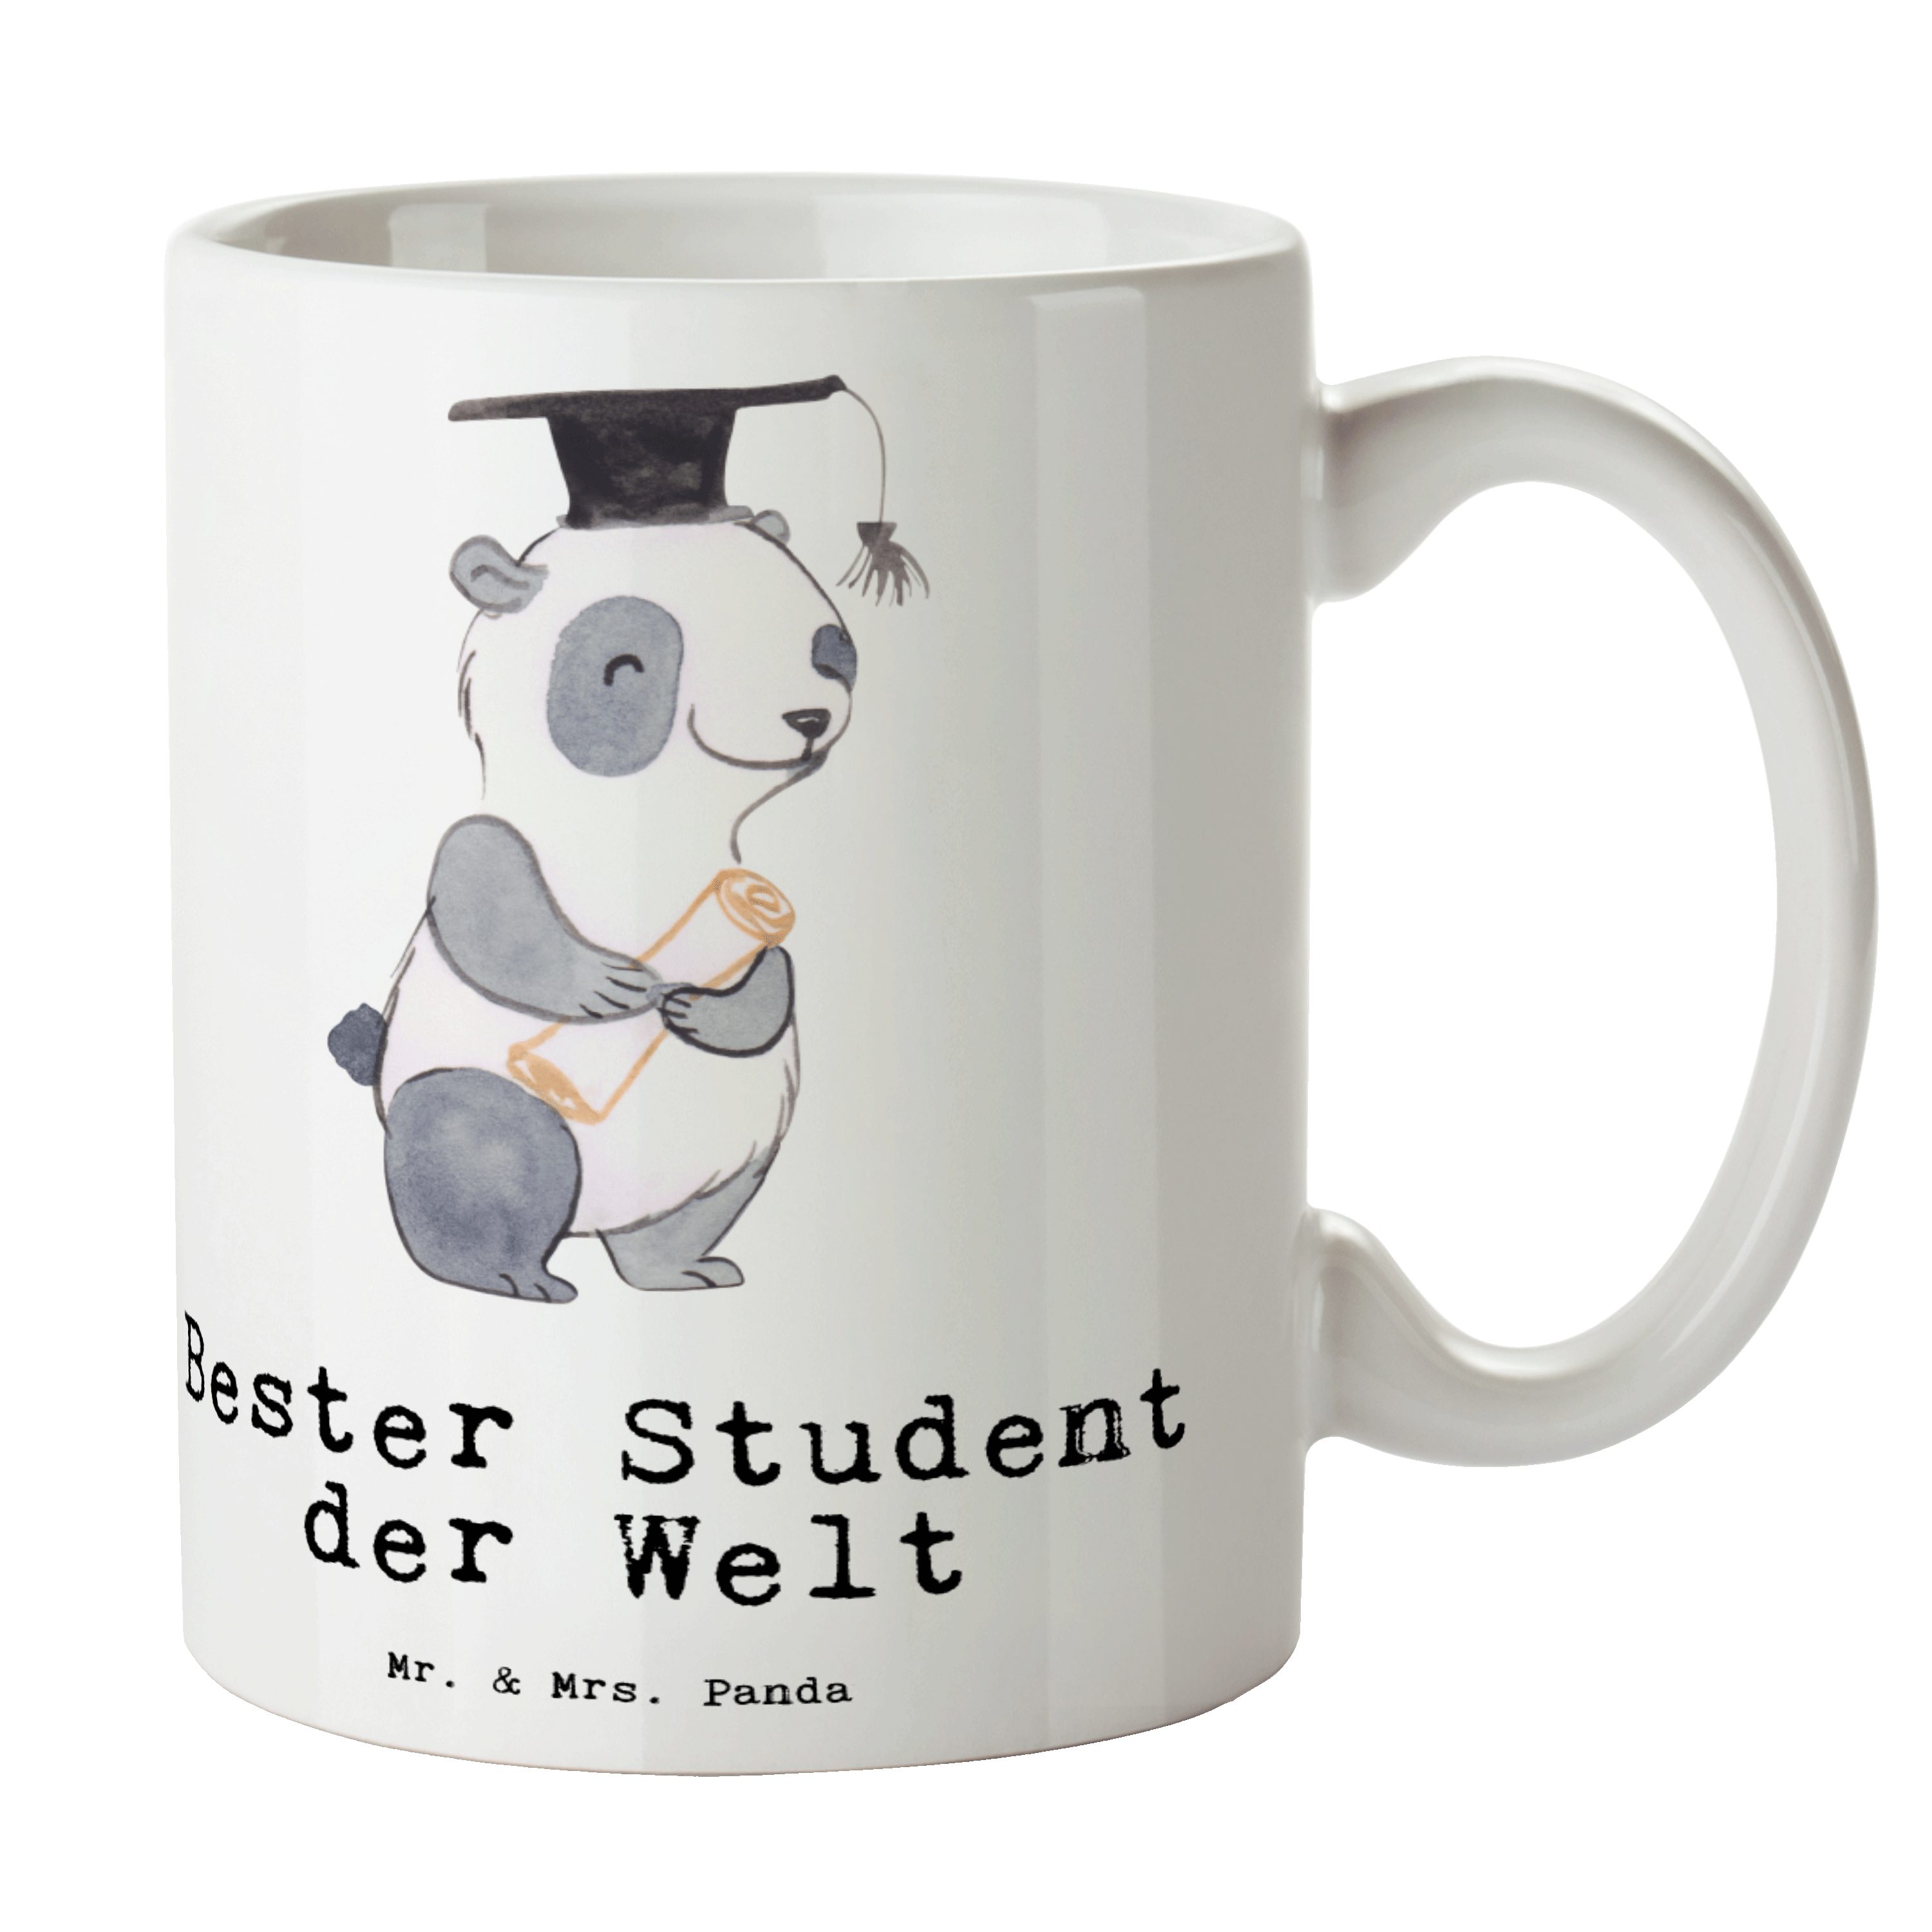 Mr. & Mrs. Panda Tasse Panda Bester Student der Welt - Weiß - Geschenk, Tee, Dankeschön, Studium, Abschluss, Büro, Becher, Schenken, Freude machen, Geburtstag, Kaffeebecher, Keramik